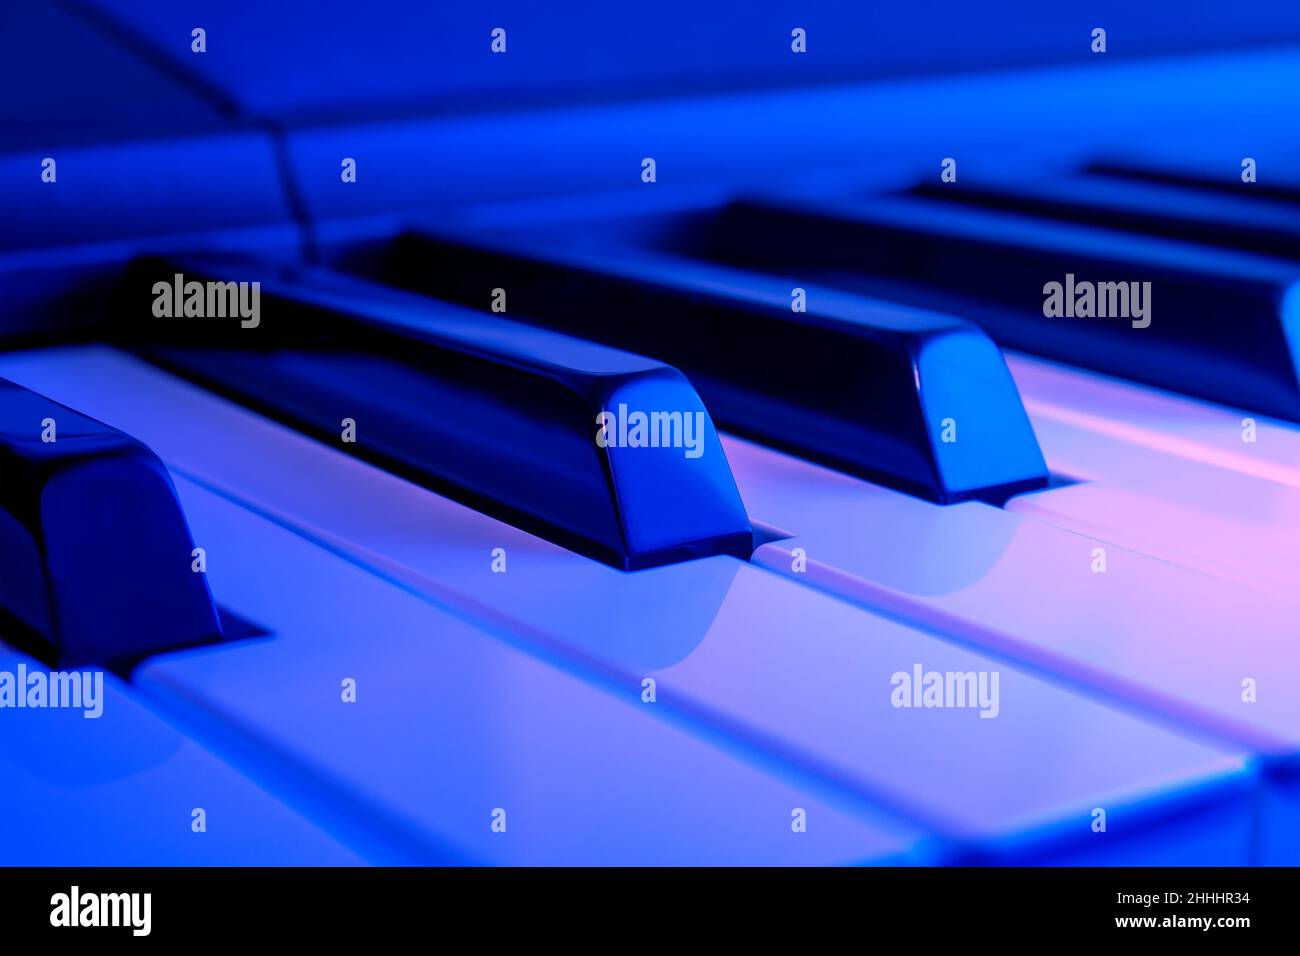 Digitale Klaviertastatur in dunkelblauem Farbton Stockfoto